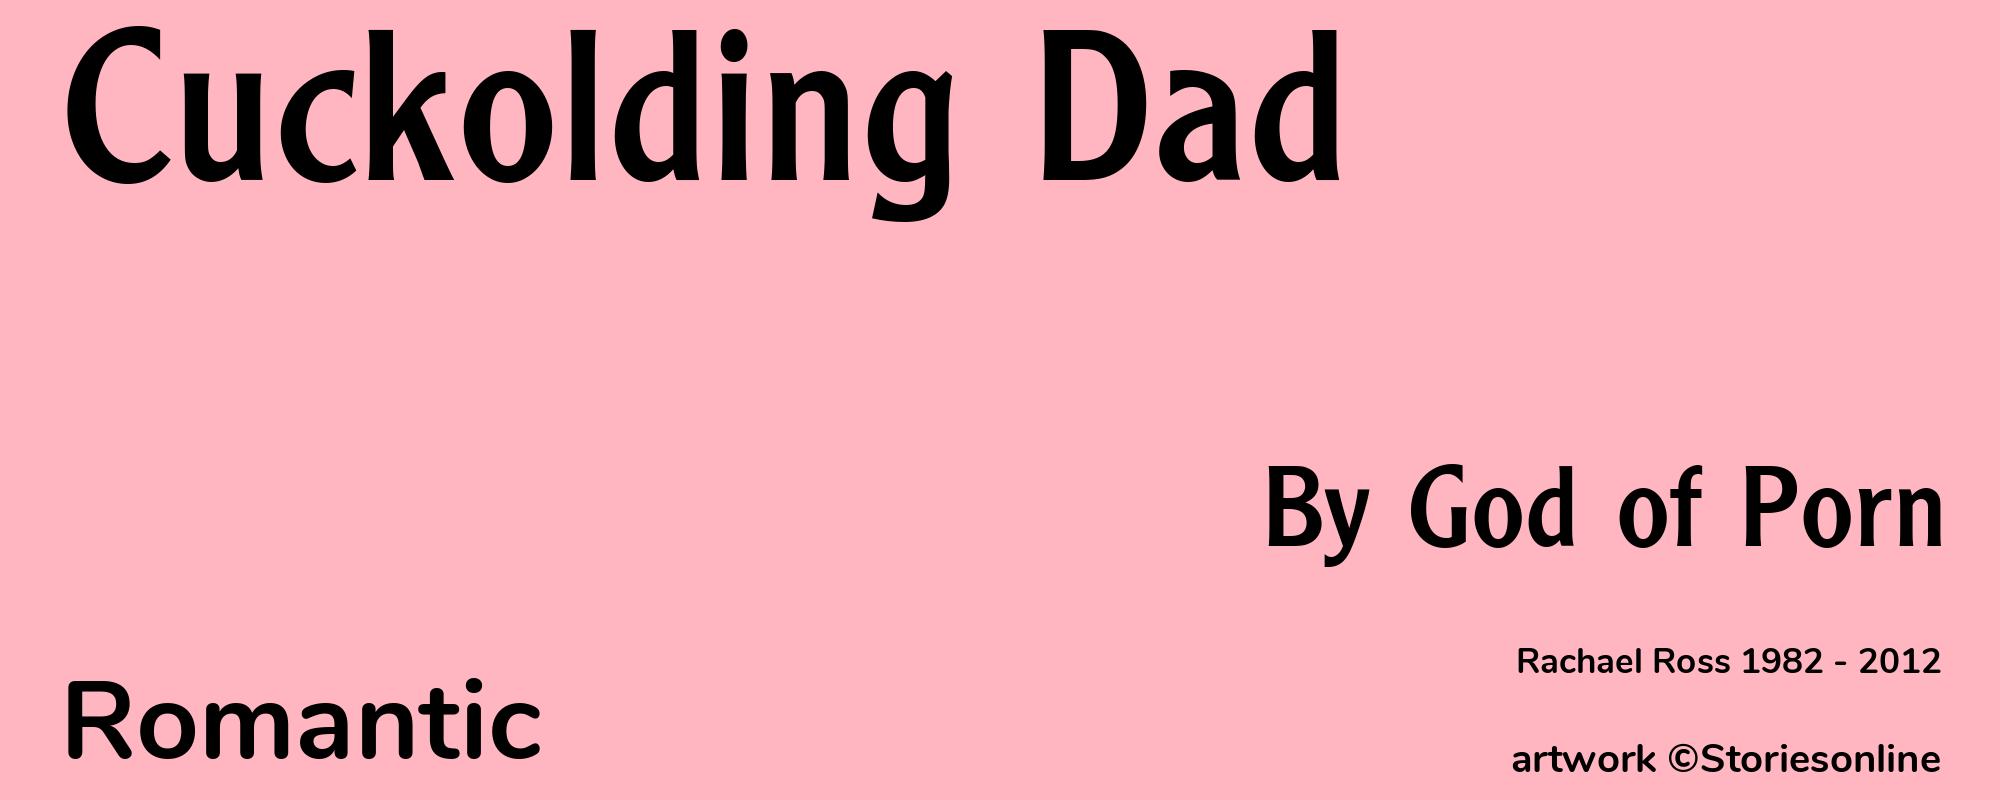 Cuckolding Dad - Cover